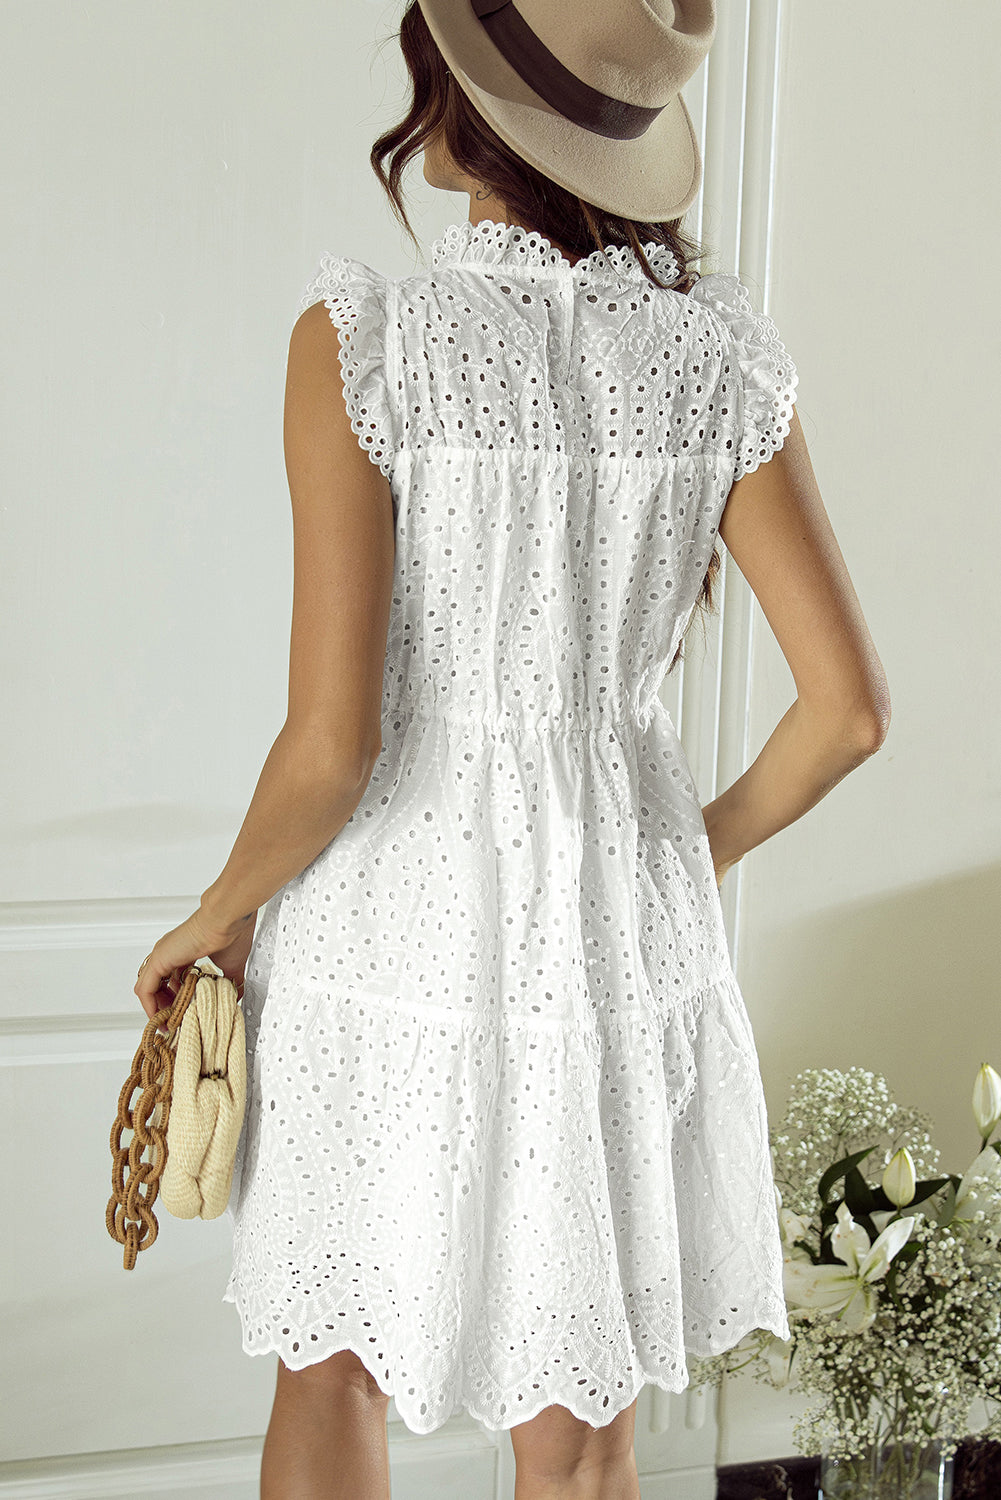 Mini-robe smockée blanche à bretelles réglables